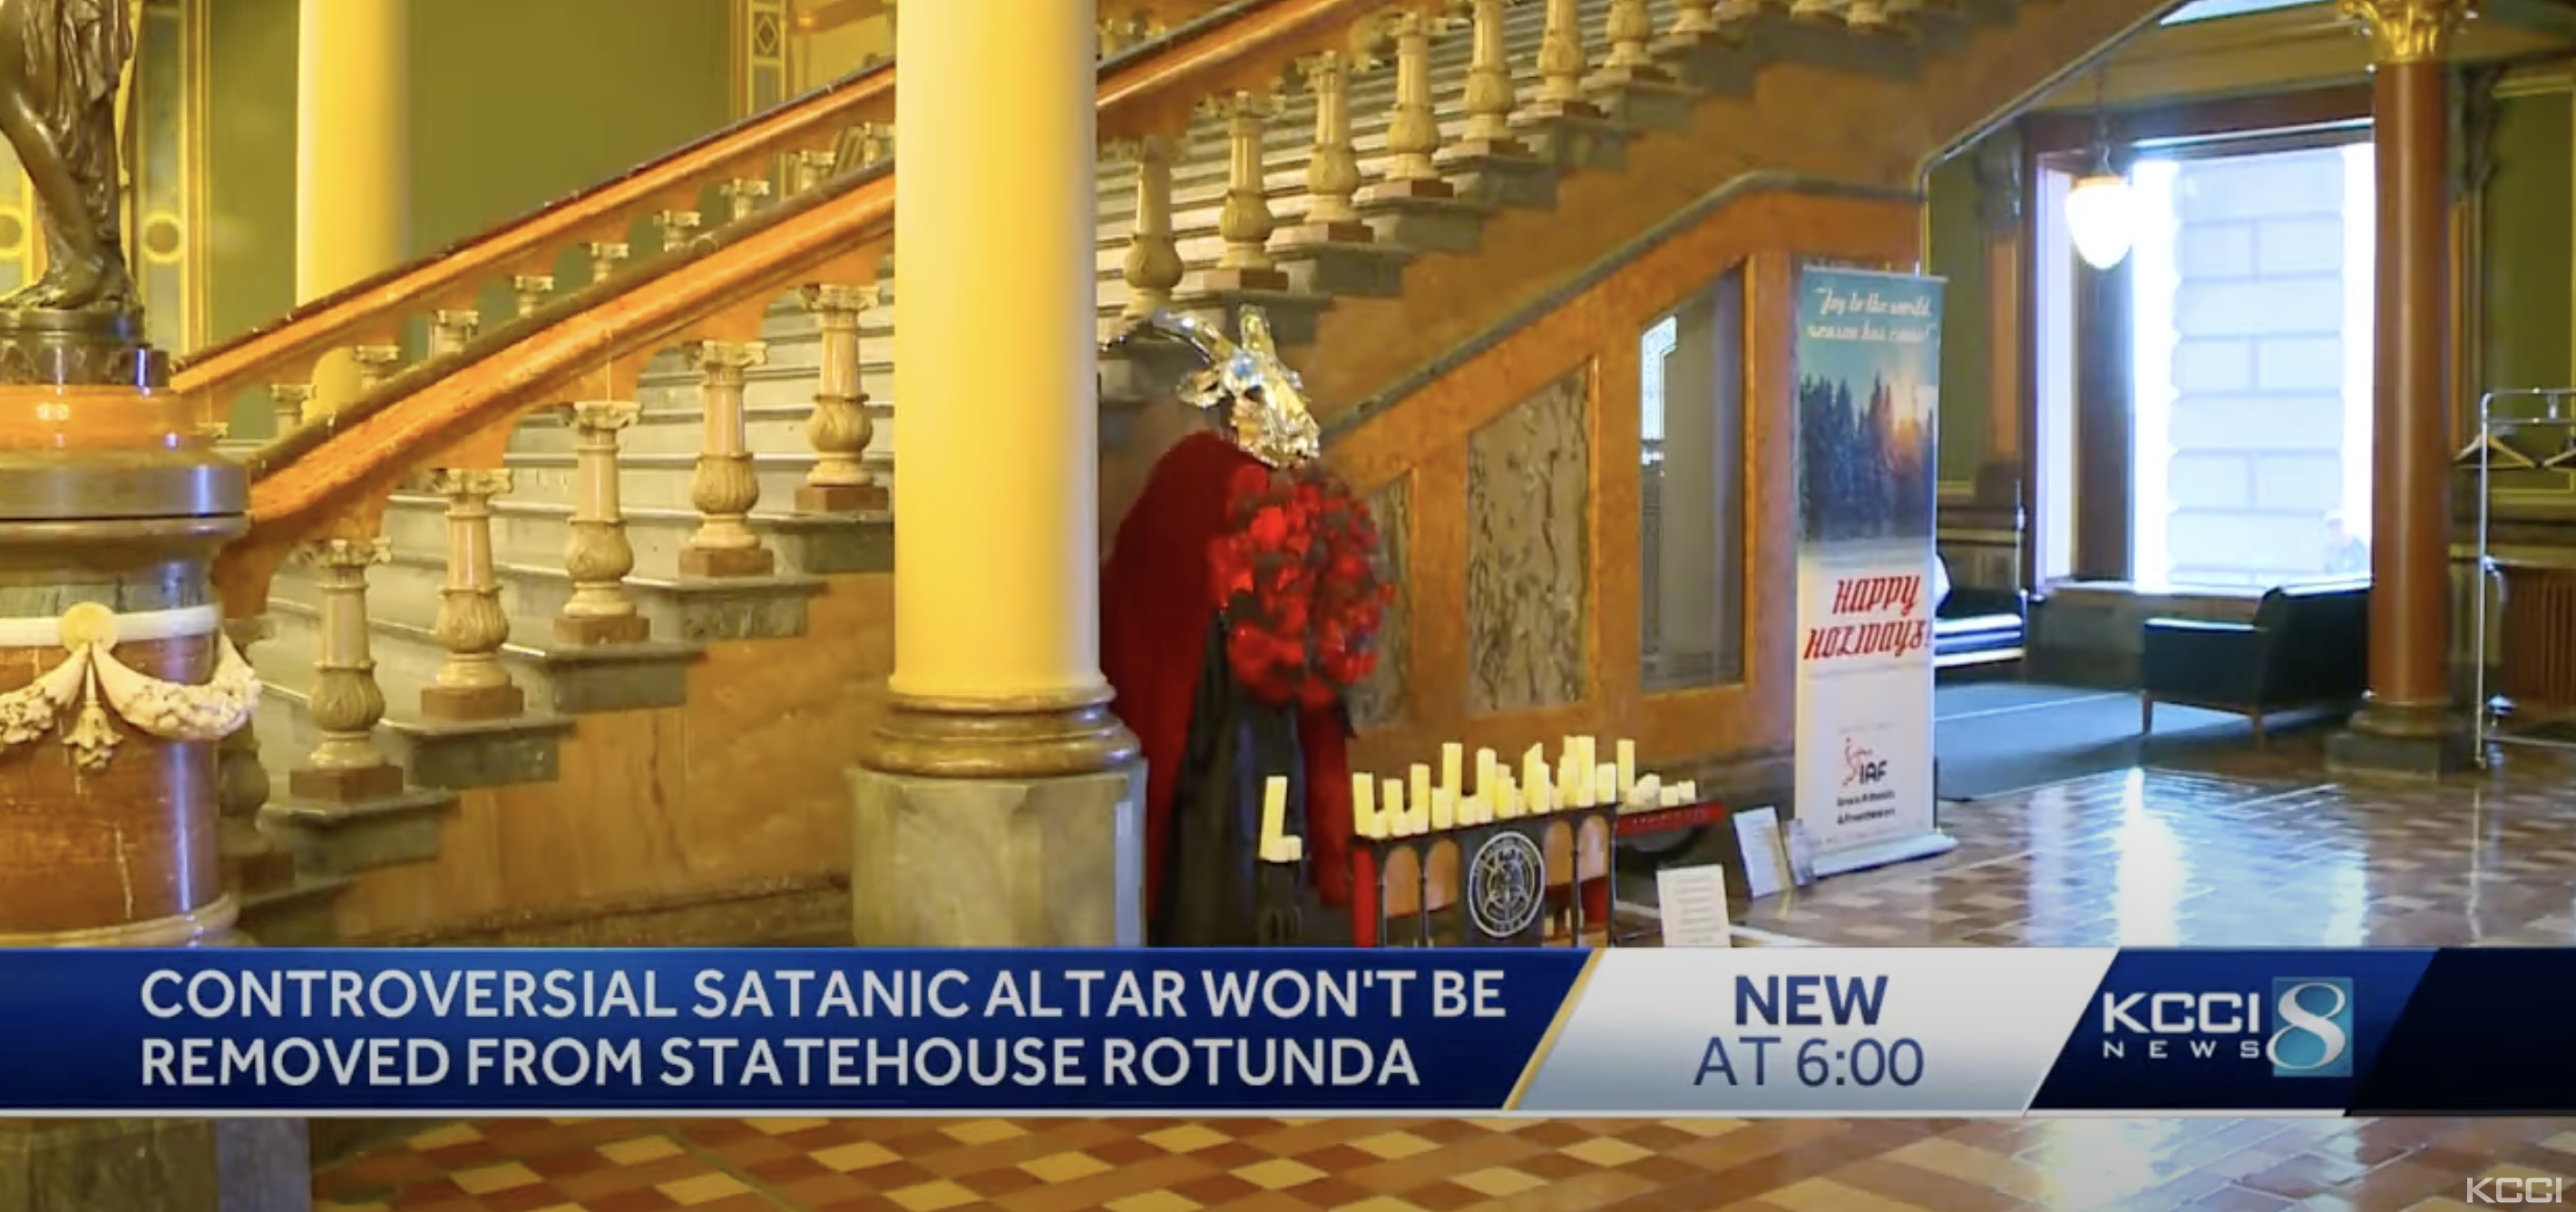 News footage of the Satanic altar